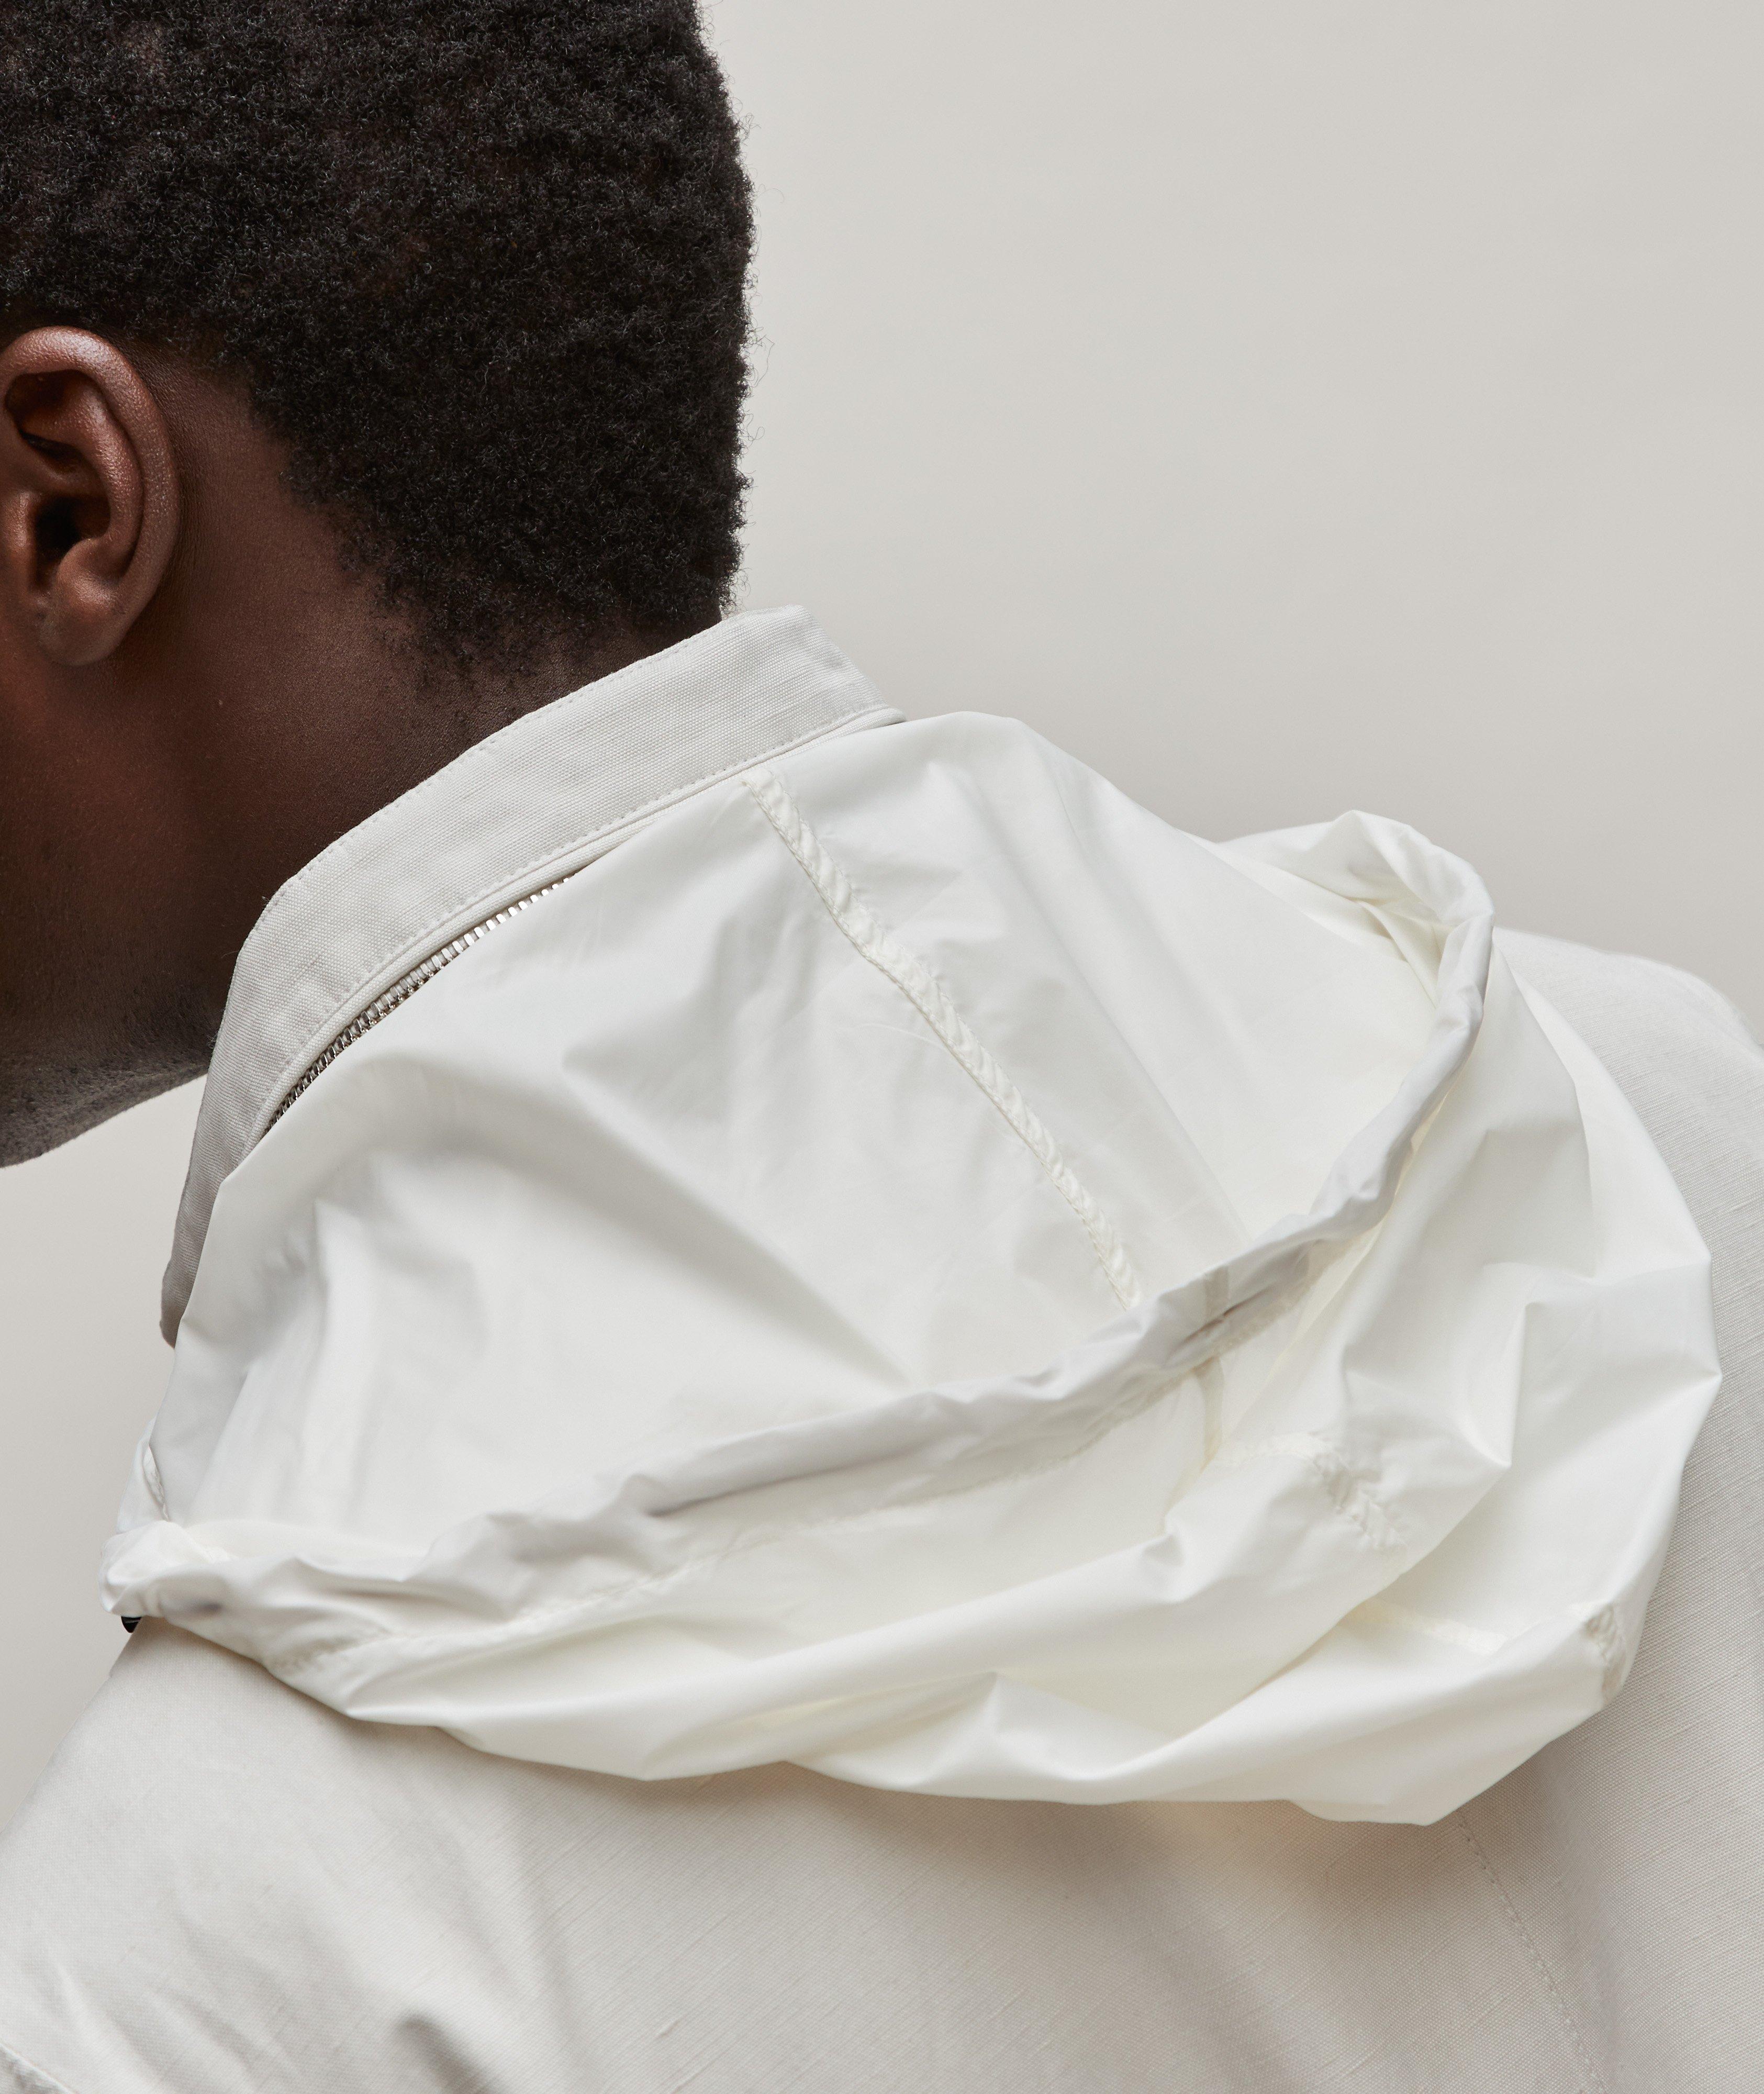 Brunello Cucinelli Linen-Silk Blend Taped Seams Field Jacket, Coats